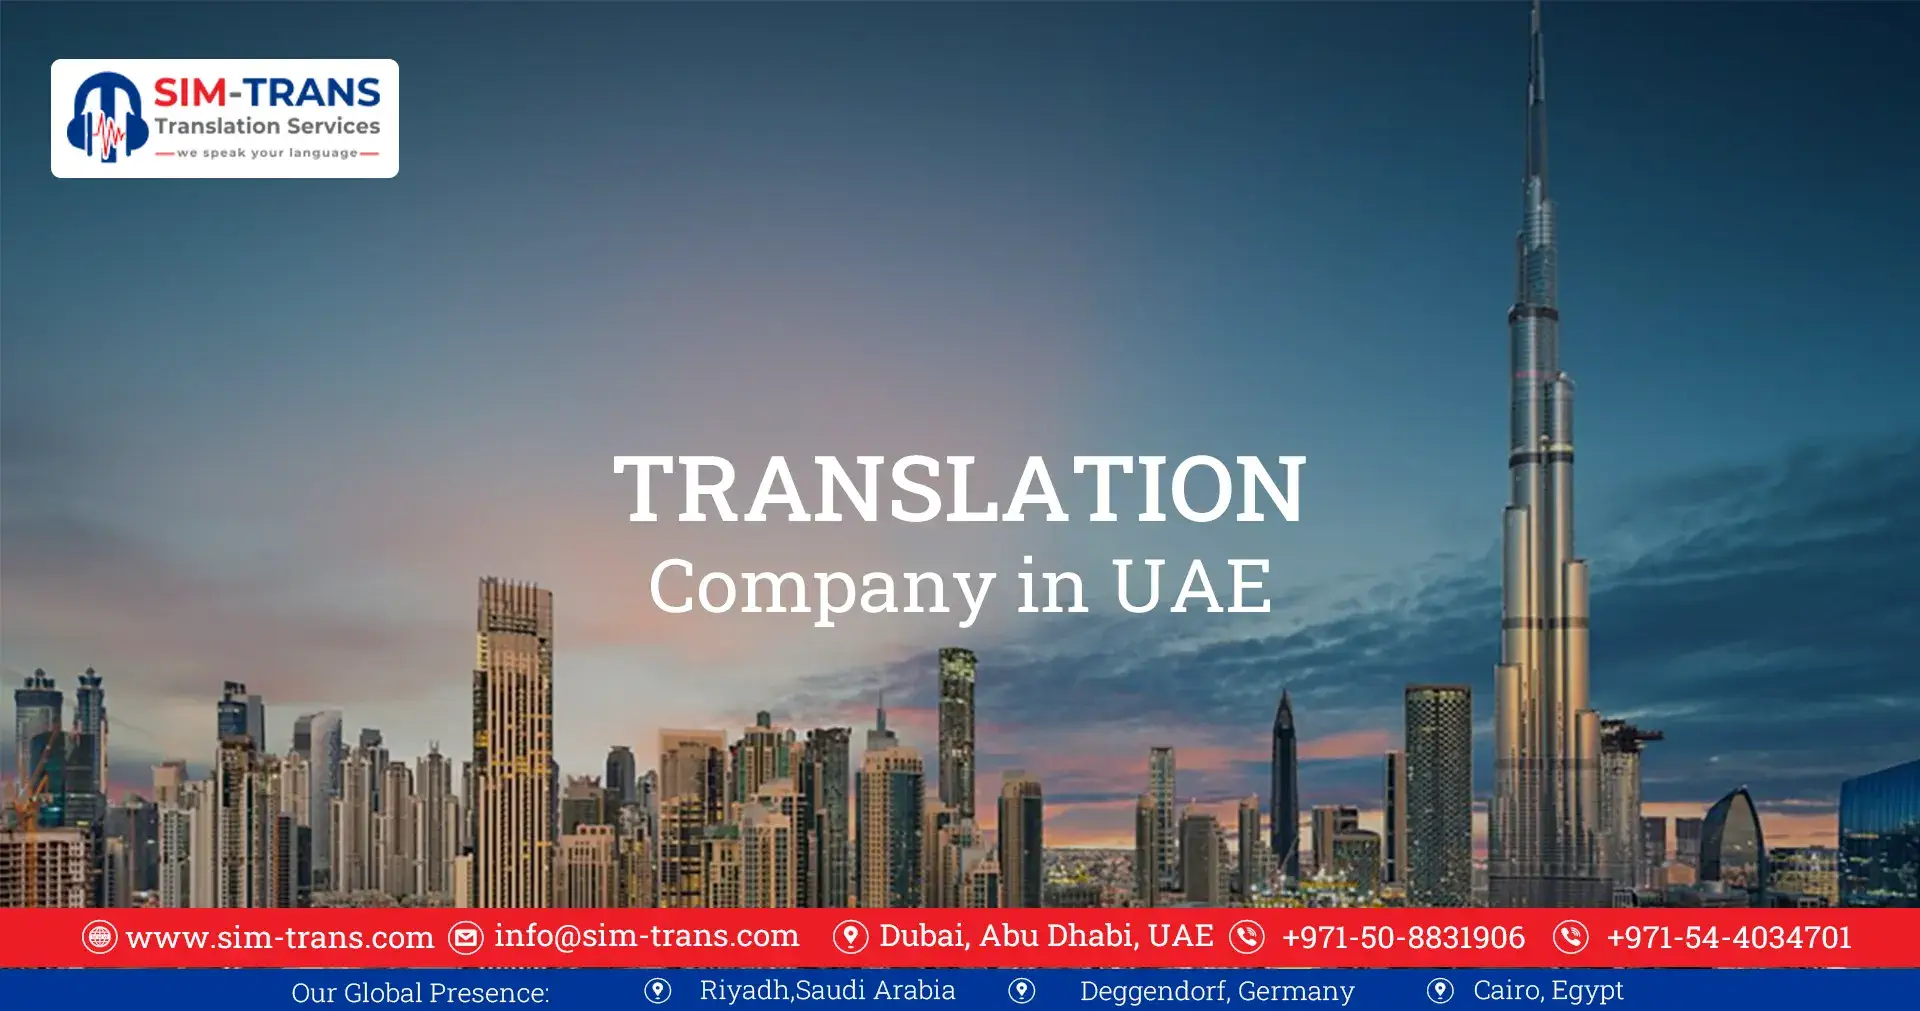 Best Translation Company in Dubai: Sim-trans Ensures Your Documents Meet Legal Standards